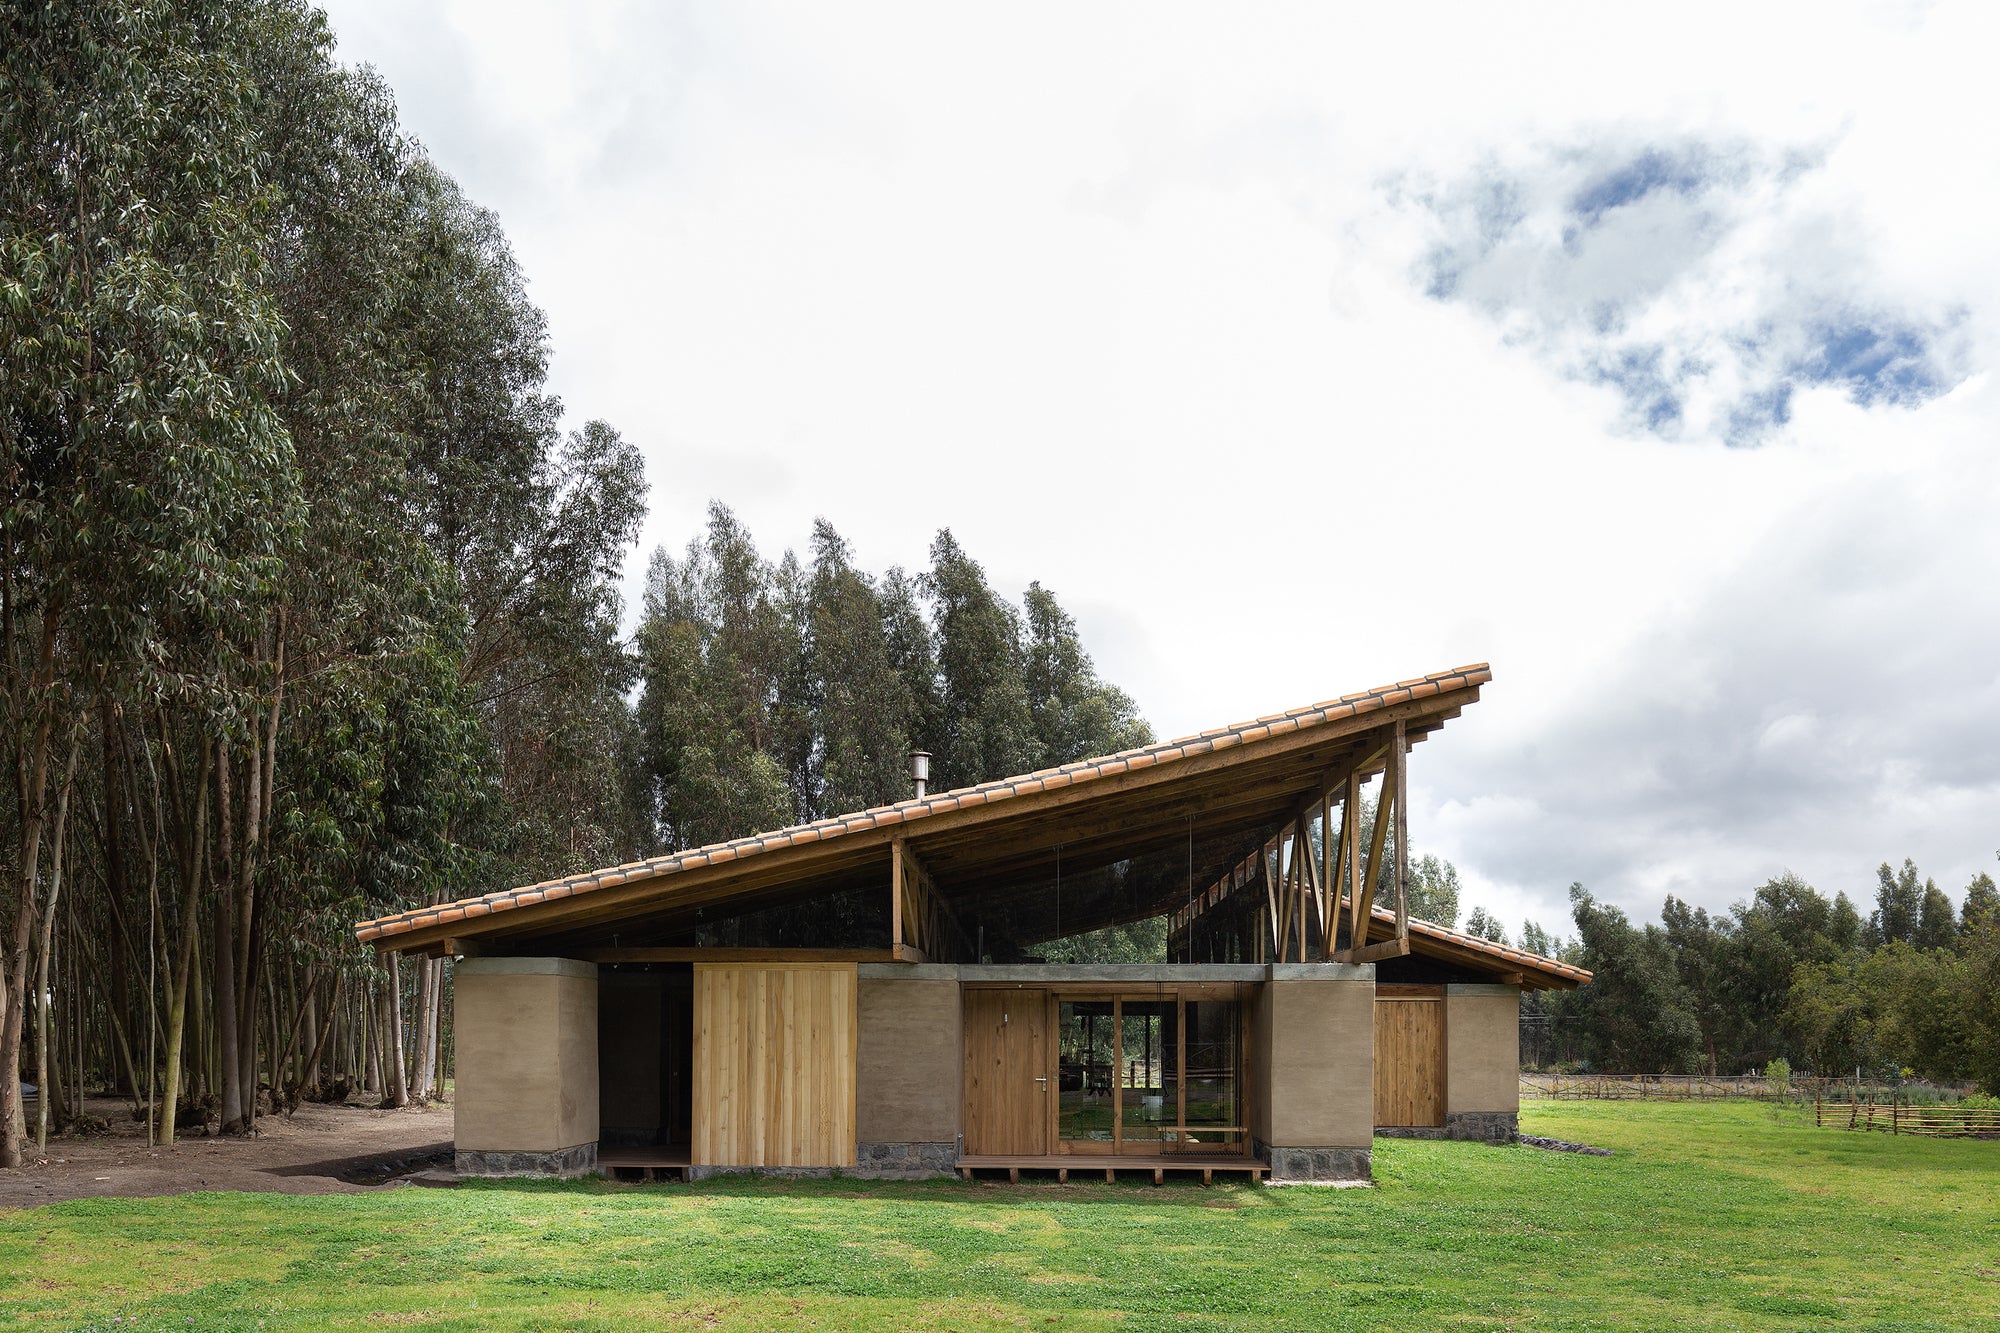 Rama Estudio's Casa Lasso In Rural Ecuador Has Angled Roof Tops And Rammed-Earth Walls